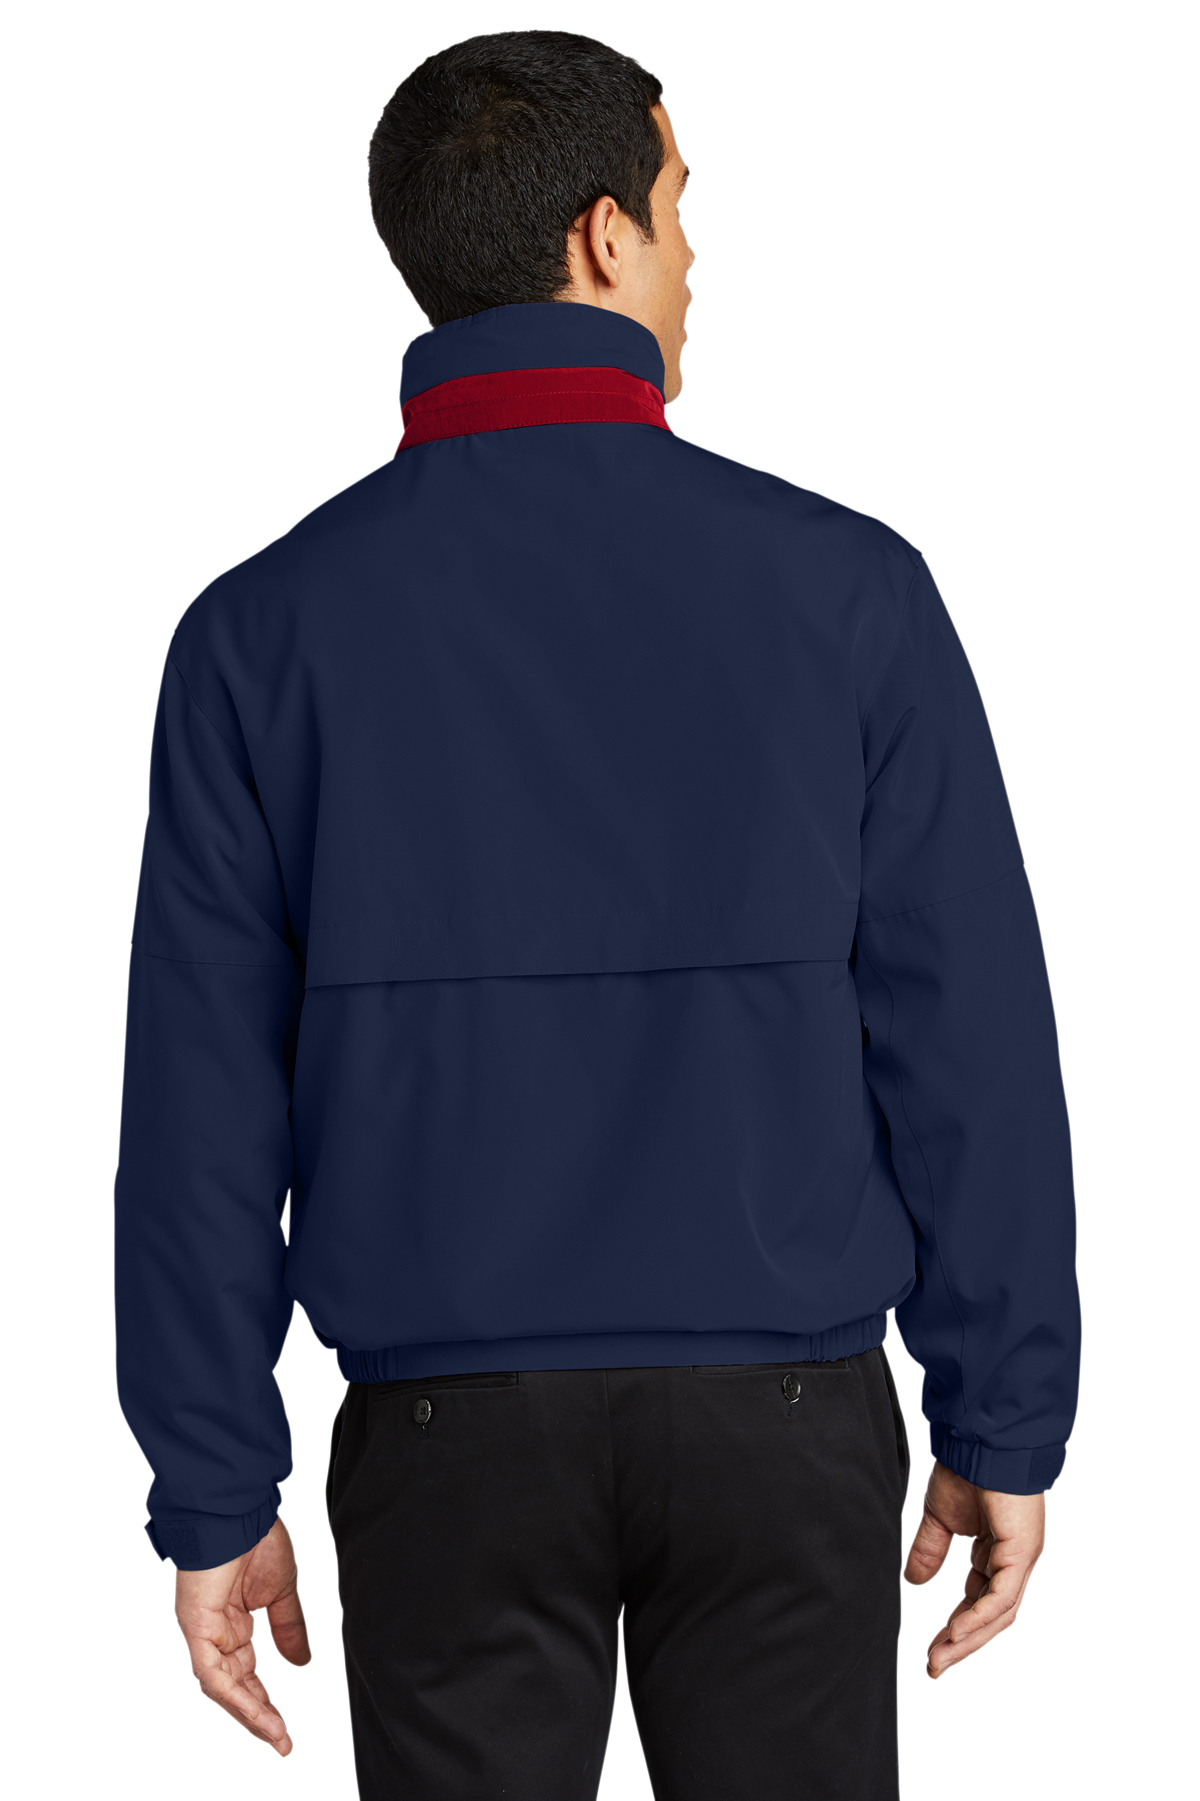 Port Authority Legacy™ Jacket | Product | SanMar